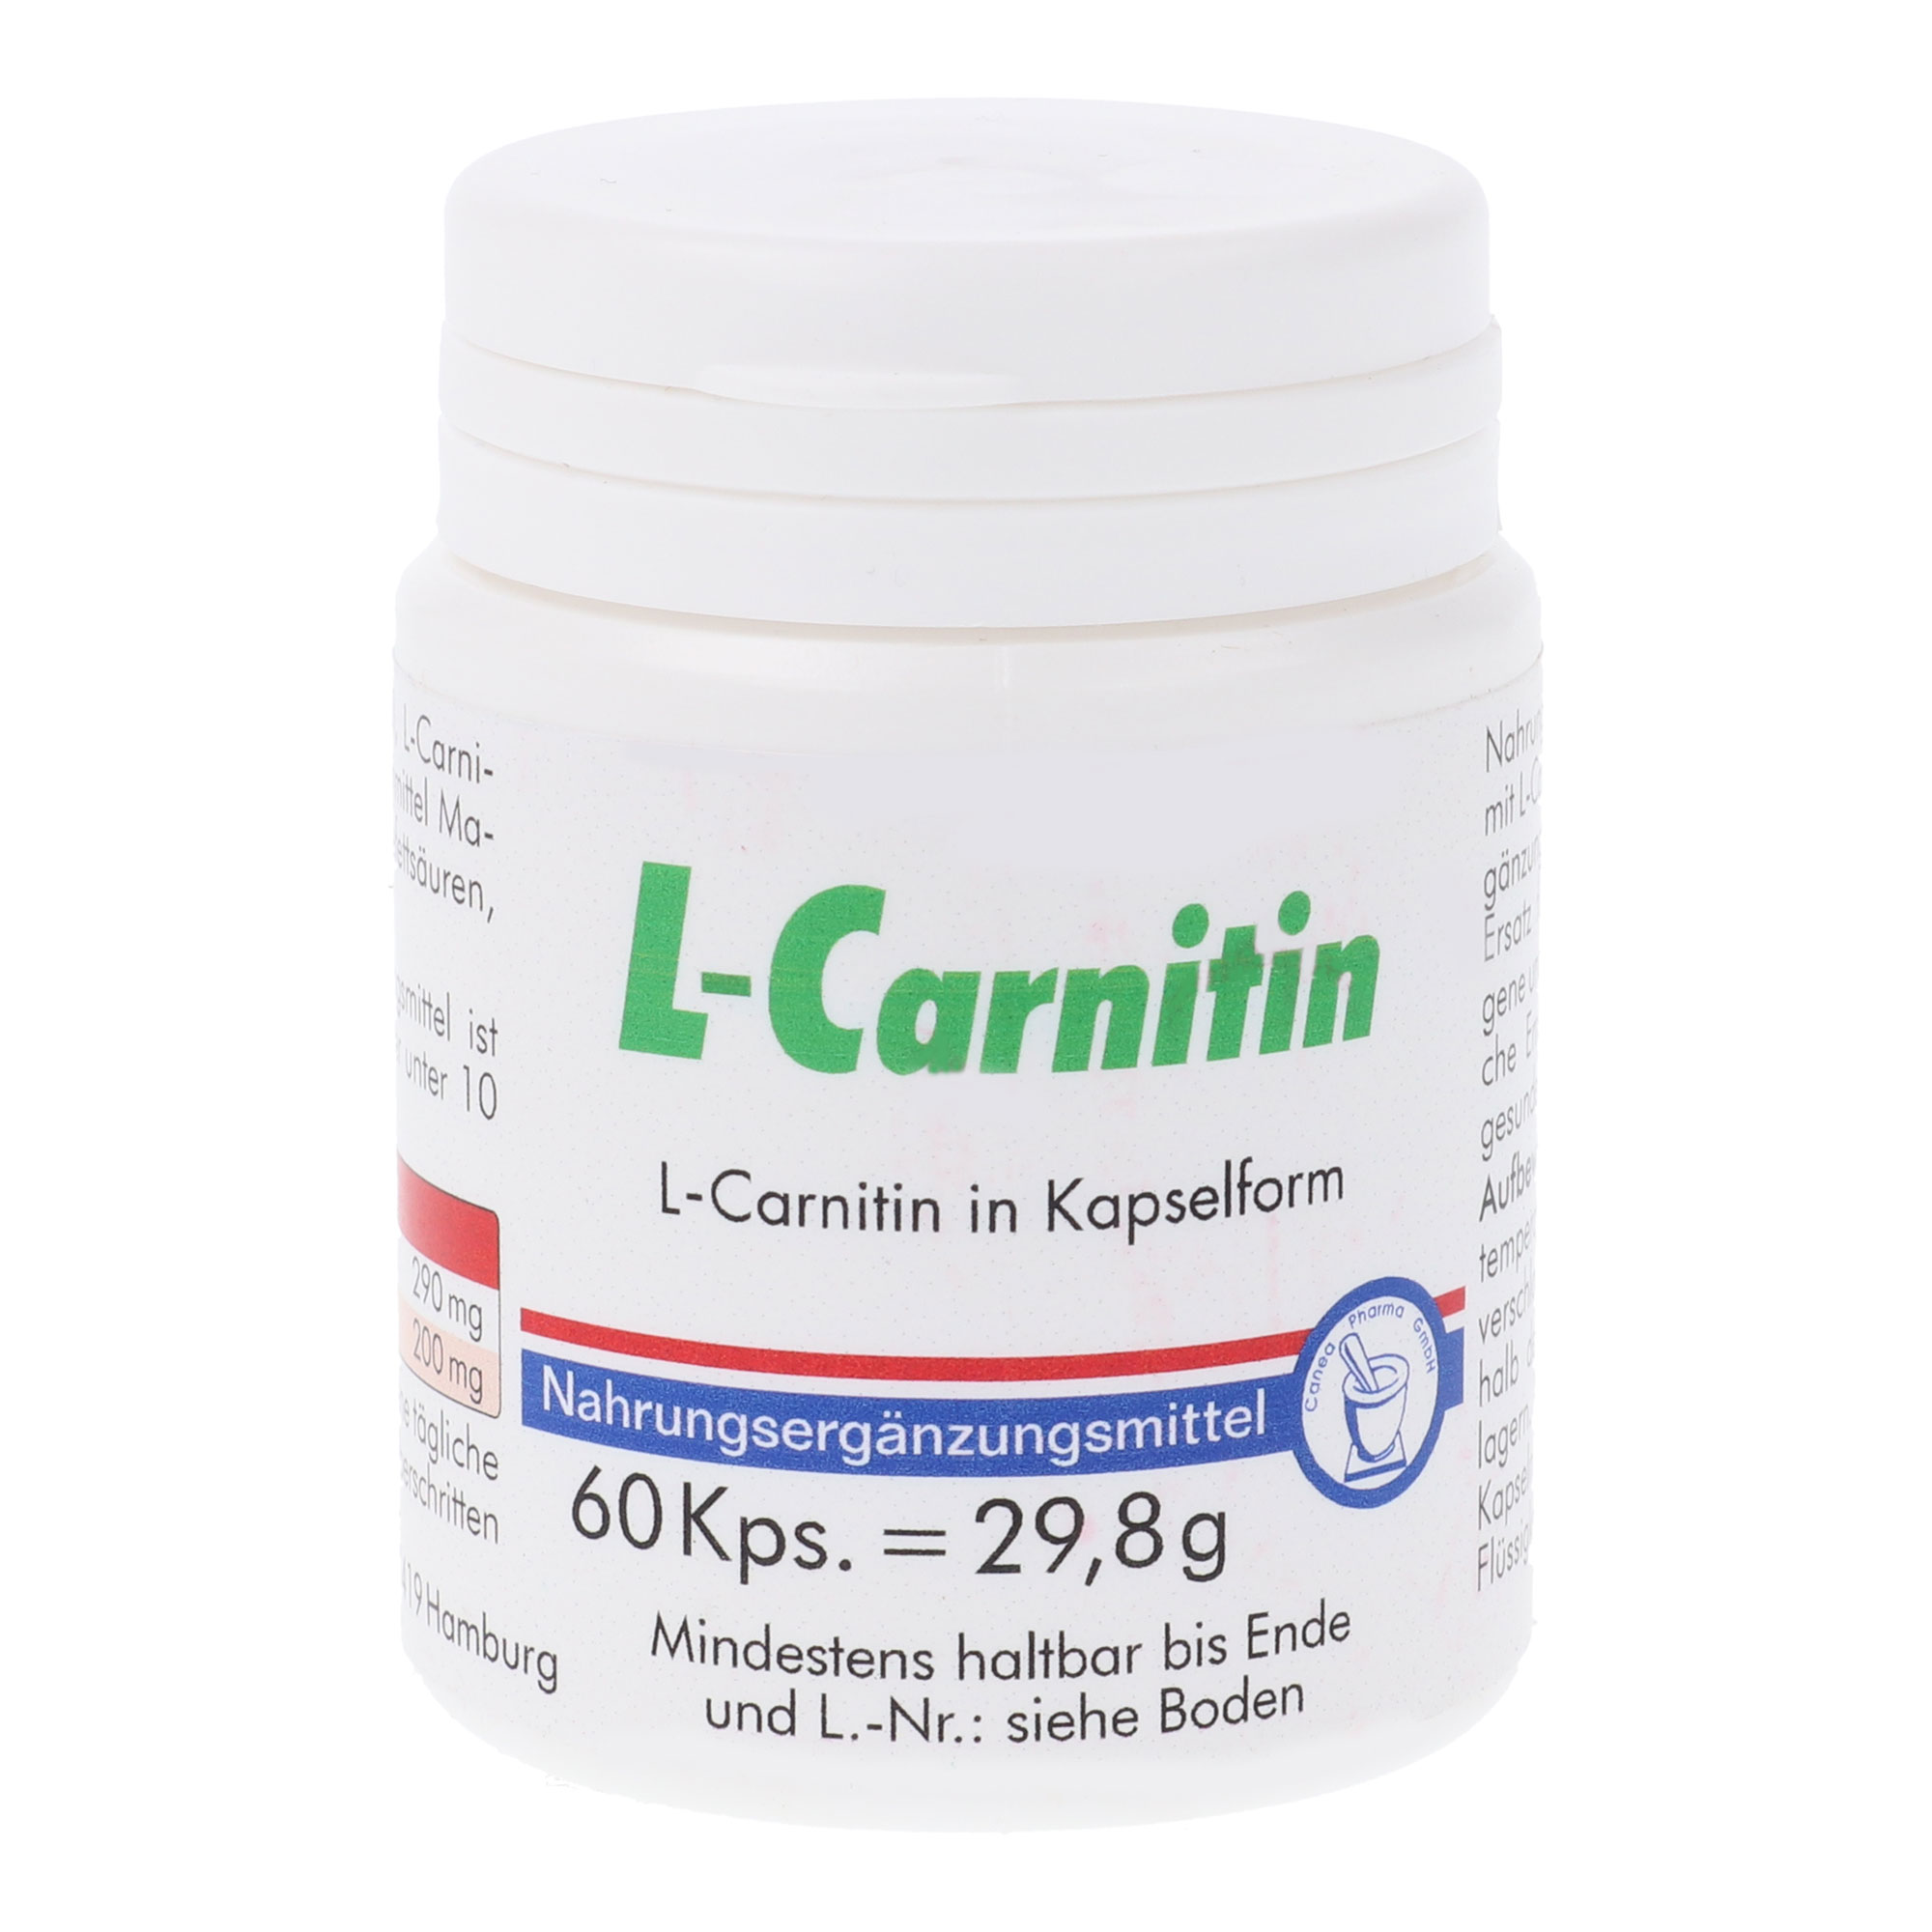 Nahrungsergänzungsmittel mit L-Carnitin.